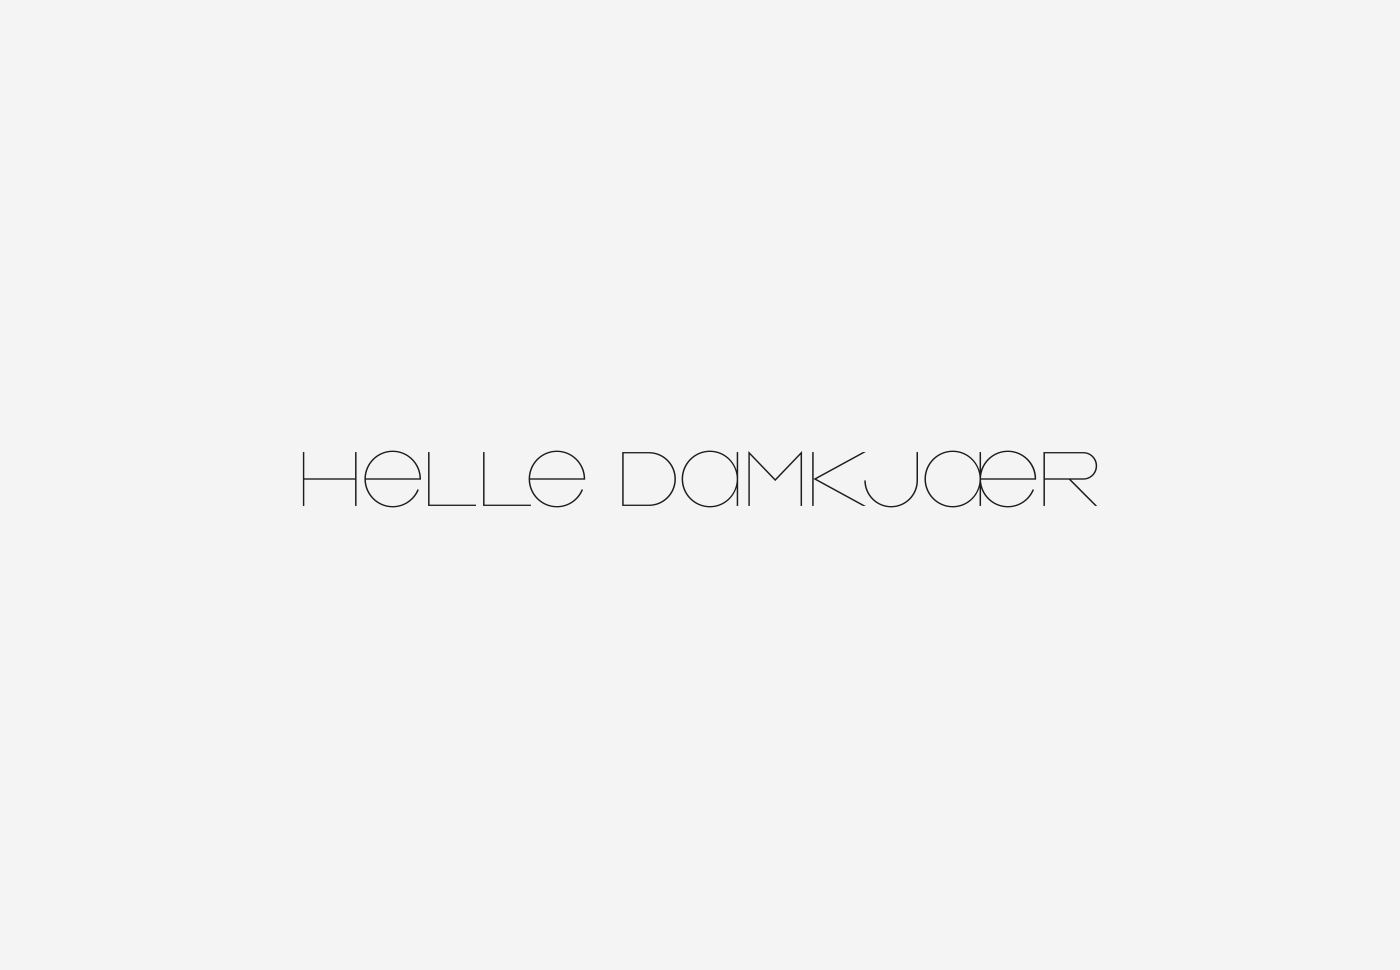 Helle Damkjær – Logo